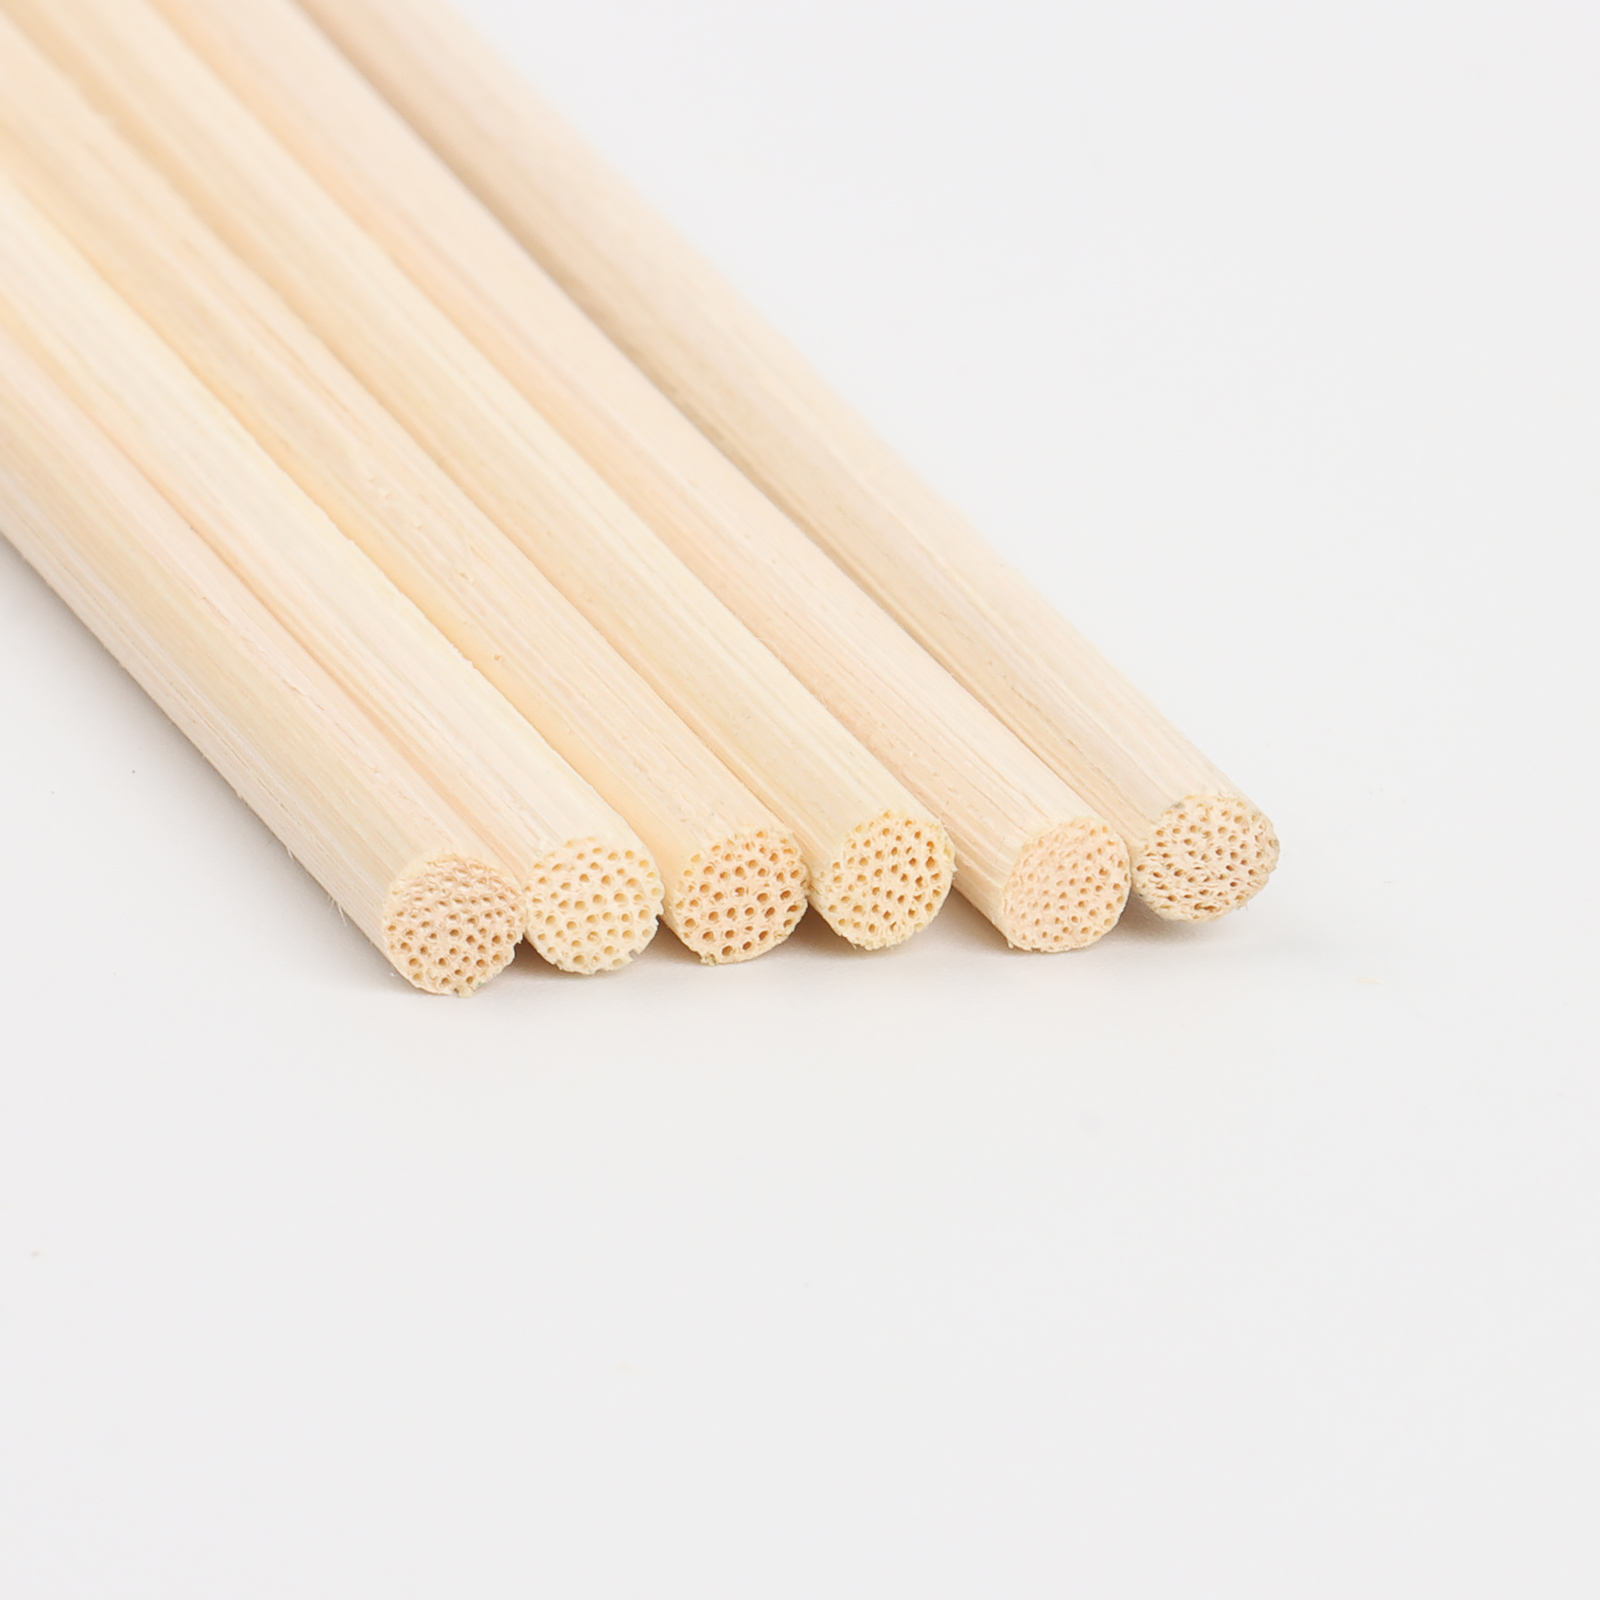 4mm 5mm 28cm 30cm White Natural Elegant Rattan Reed Diffuser Sticks for Home Diffuser Sticks